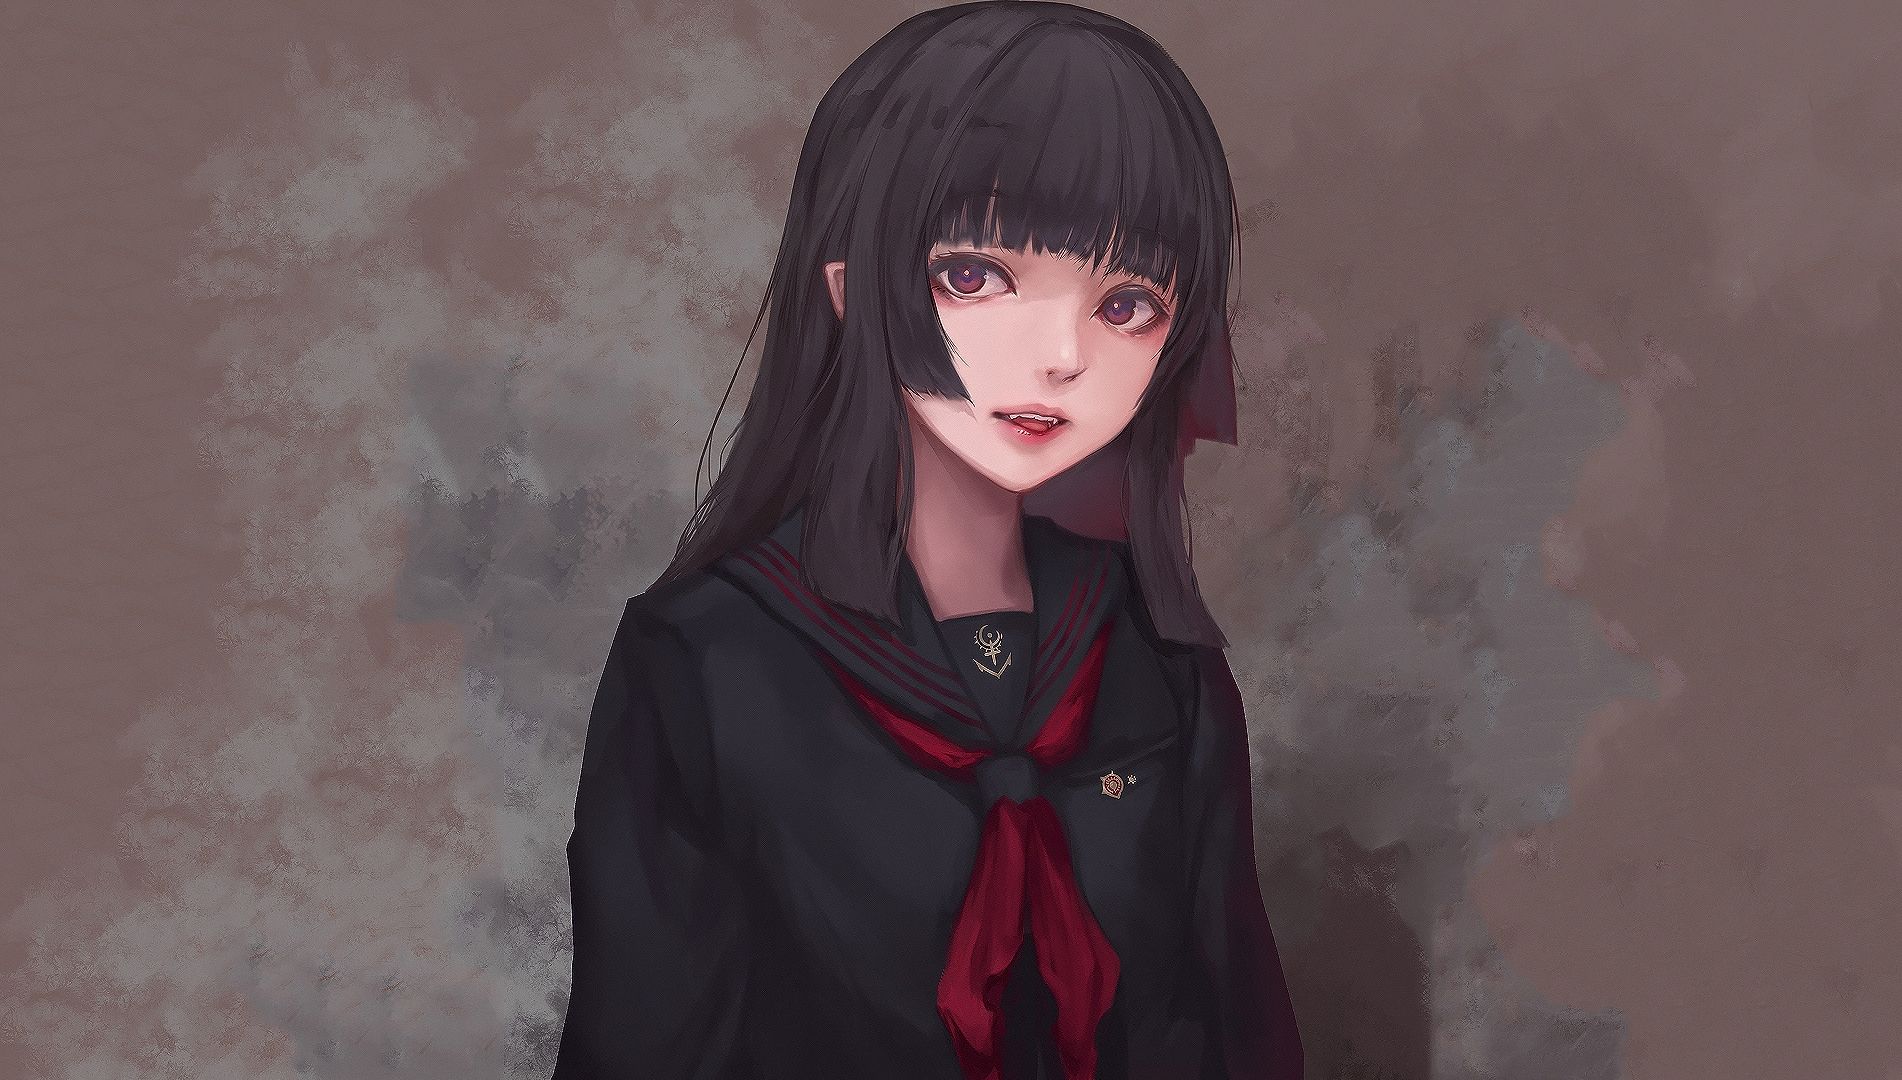 Wallpaper Black, School dress, original, anime girl